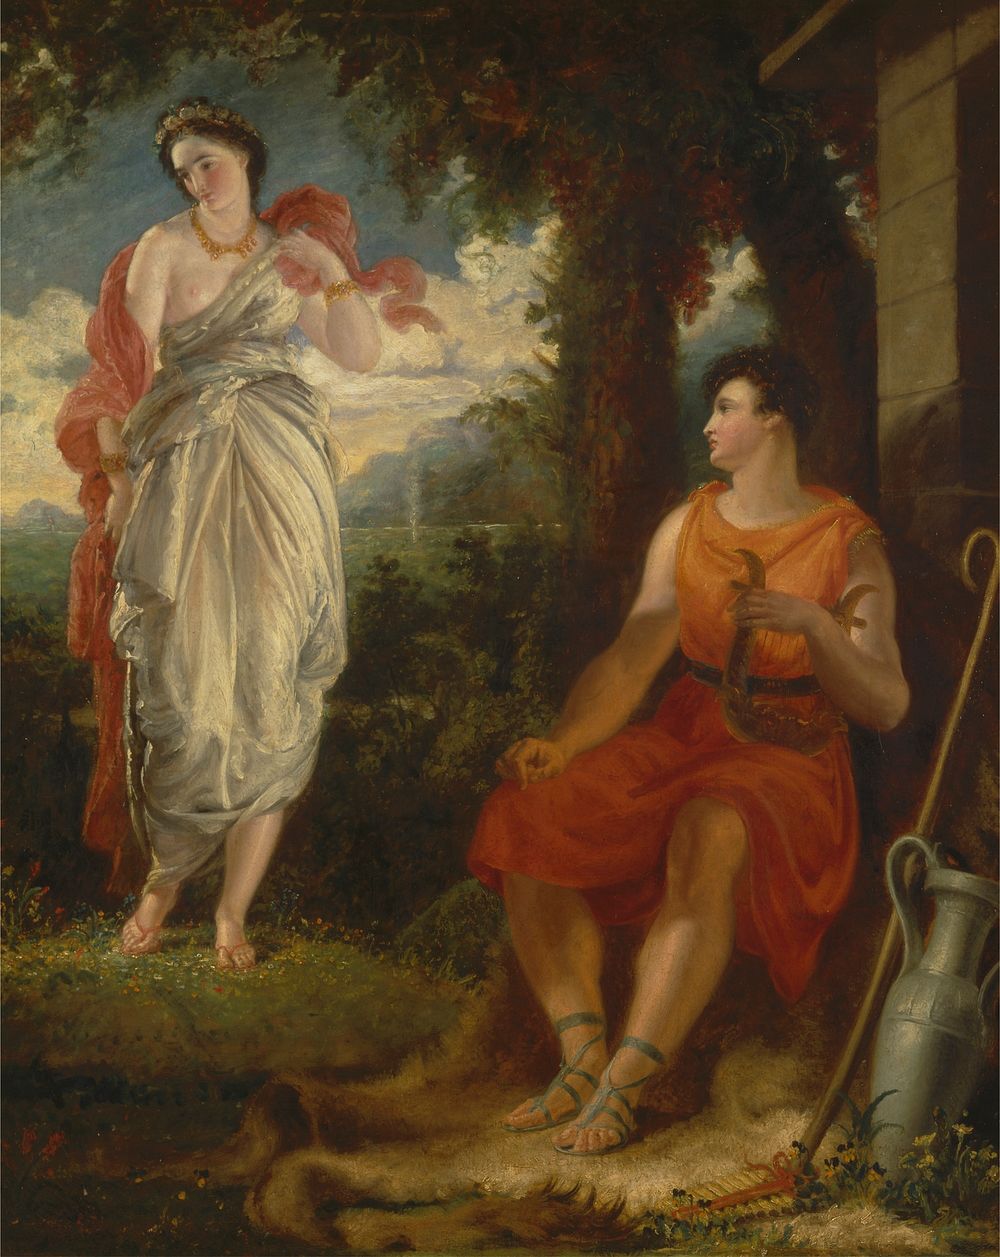 Venus and Anchises [1826, Royal Academy of Arts, London, exhibition catalogue]